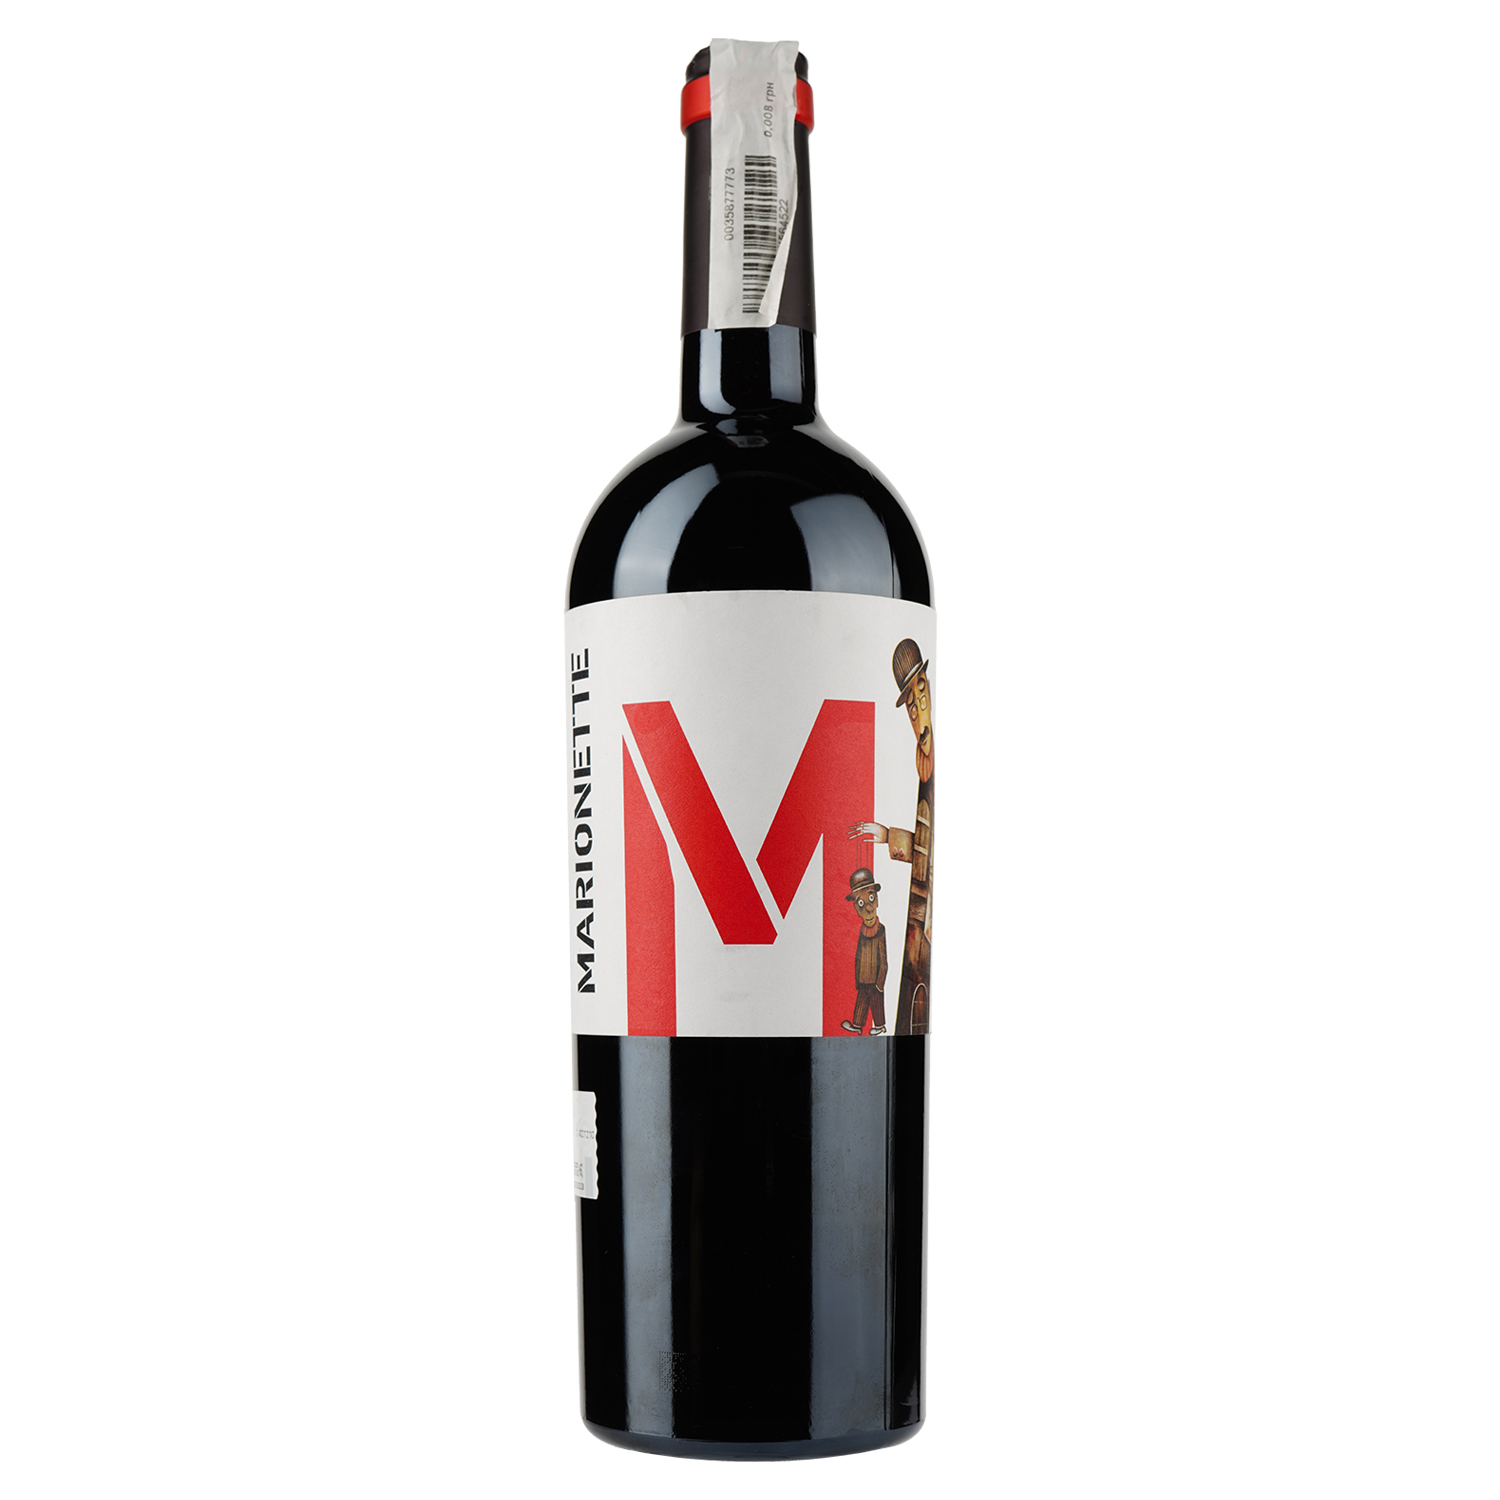 Вино Ego Bodegas Marionette 2015 DOP Jumilla, красное, сухое, 0,75 л - фото 1